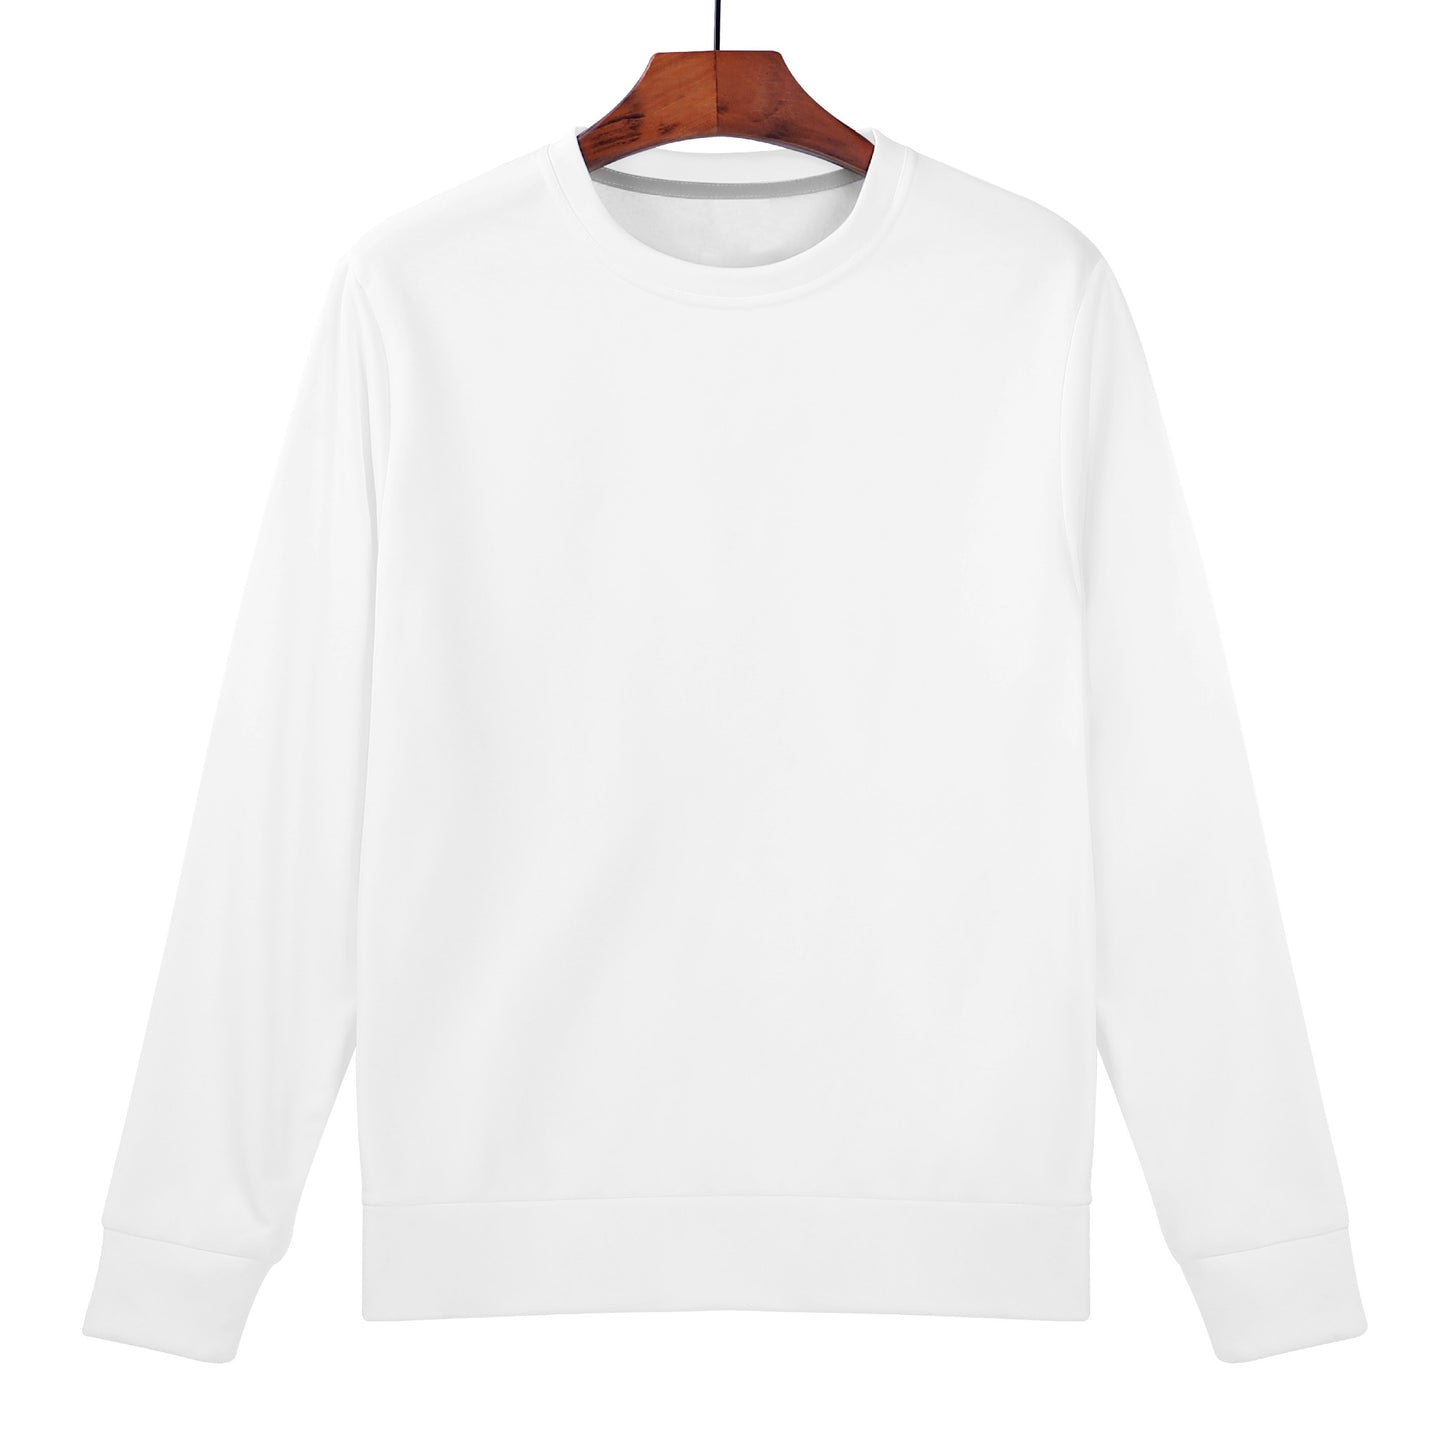 Create Your Own - All Over Print Custom Sweatshirt - HayGoodies